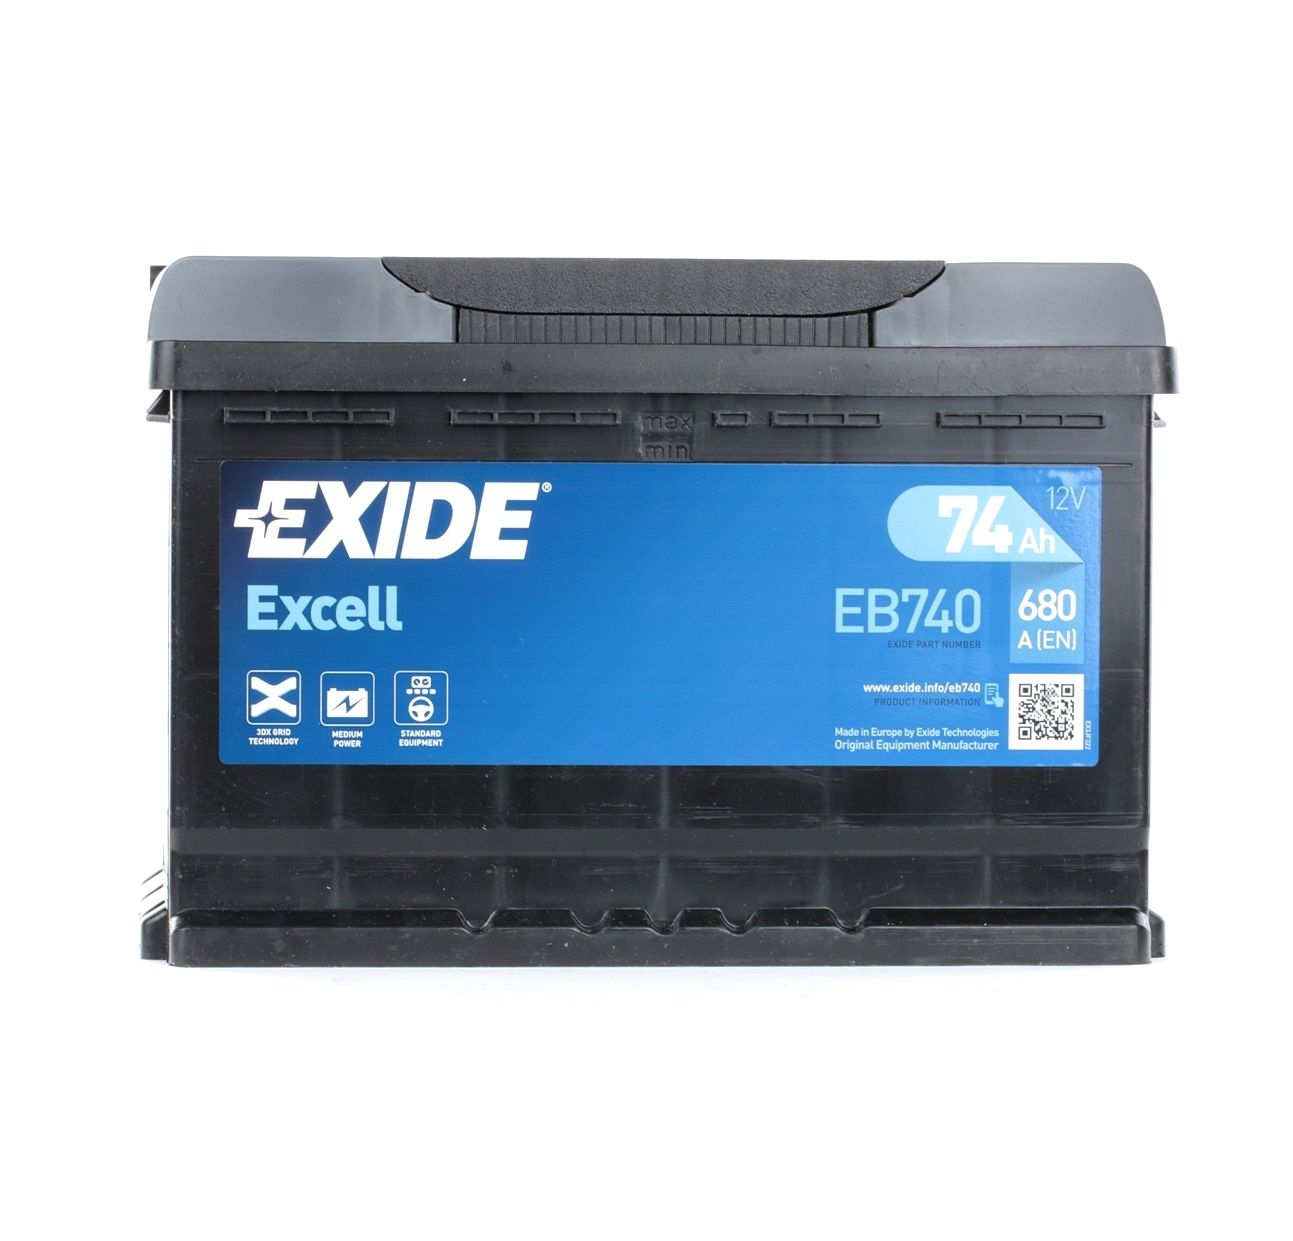 EXIDE EB740 Akumulator tanio w sklep online